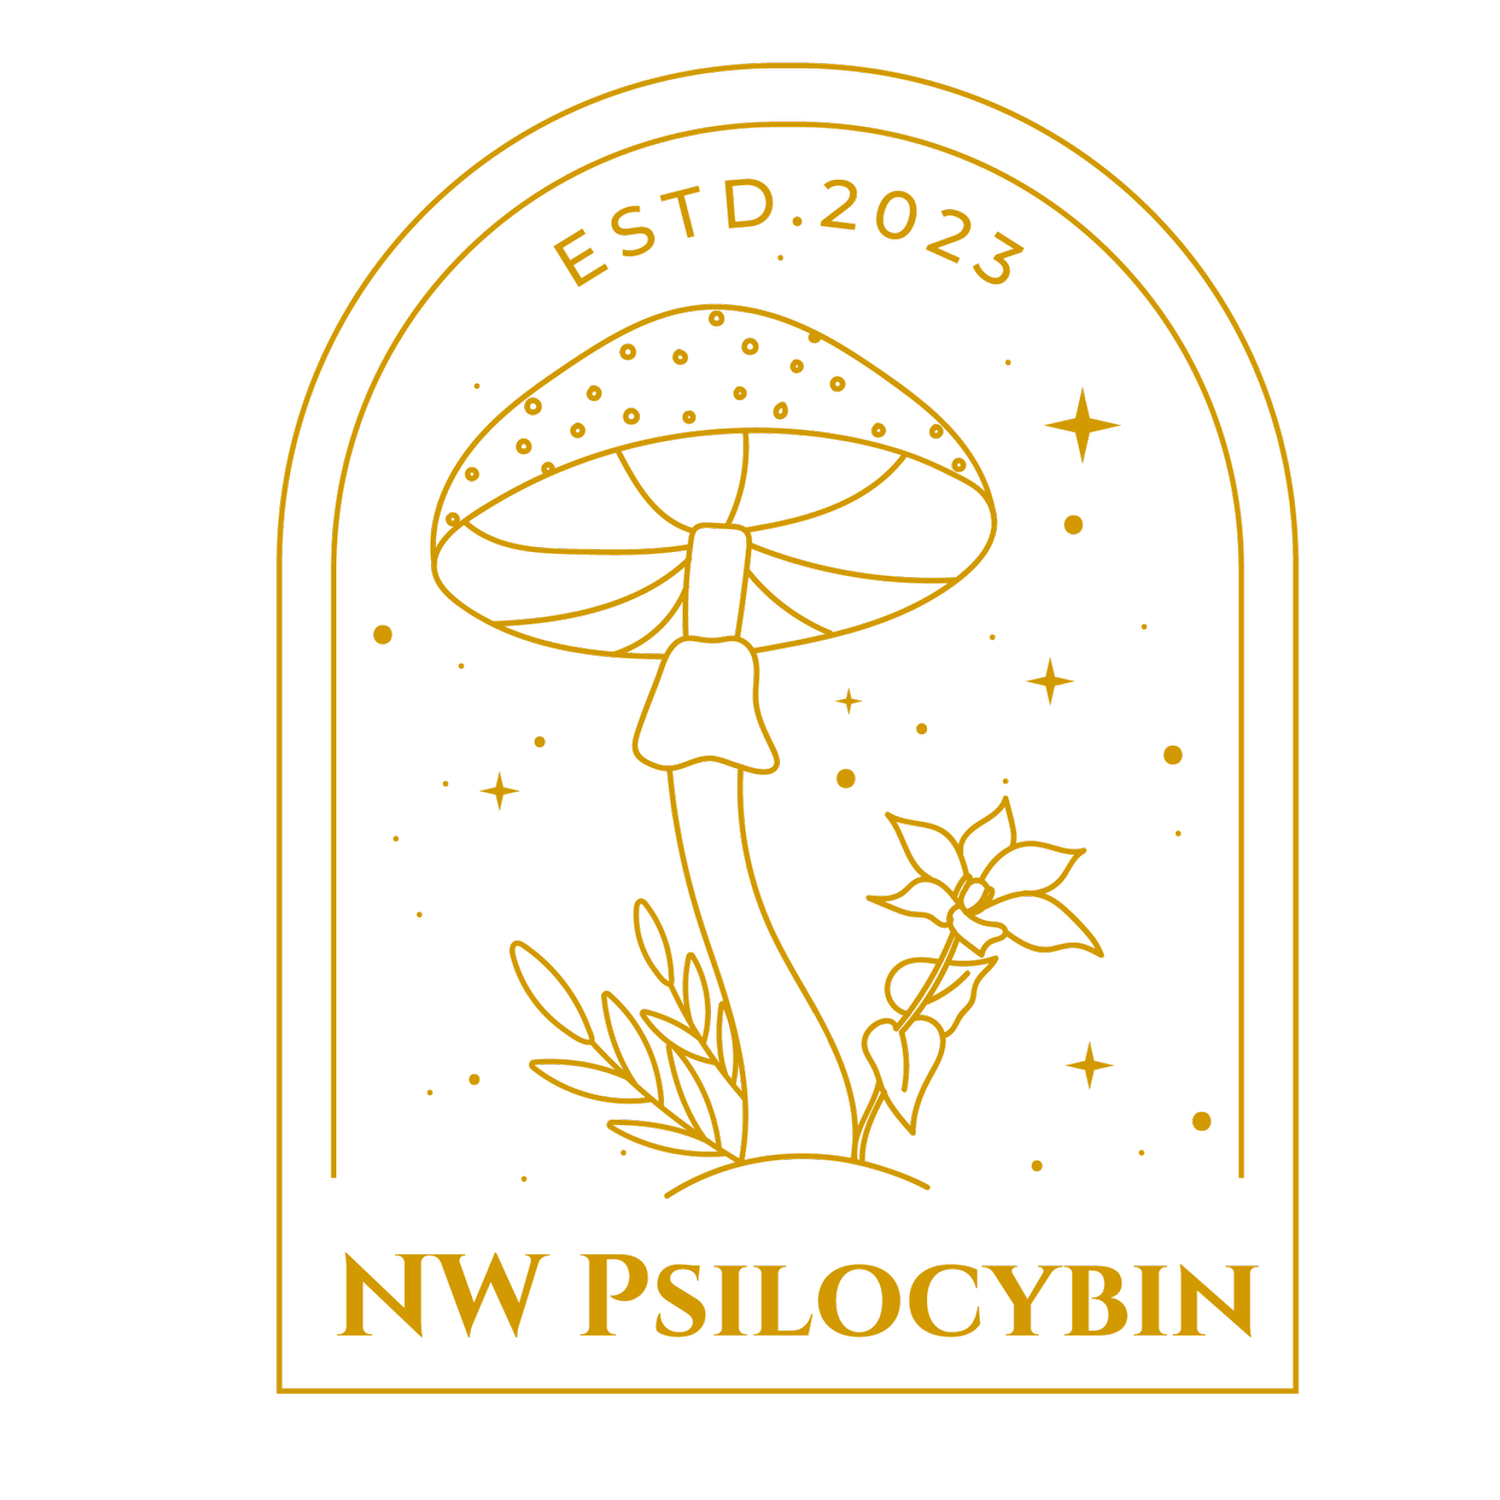 NW Psilocybin